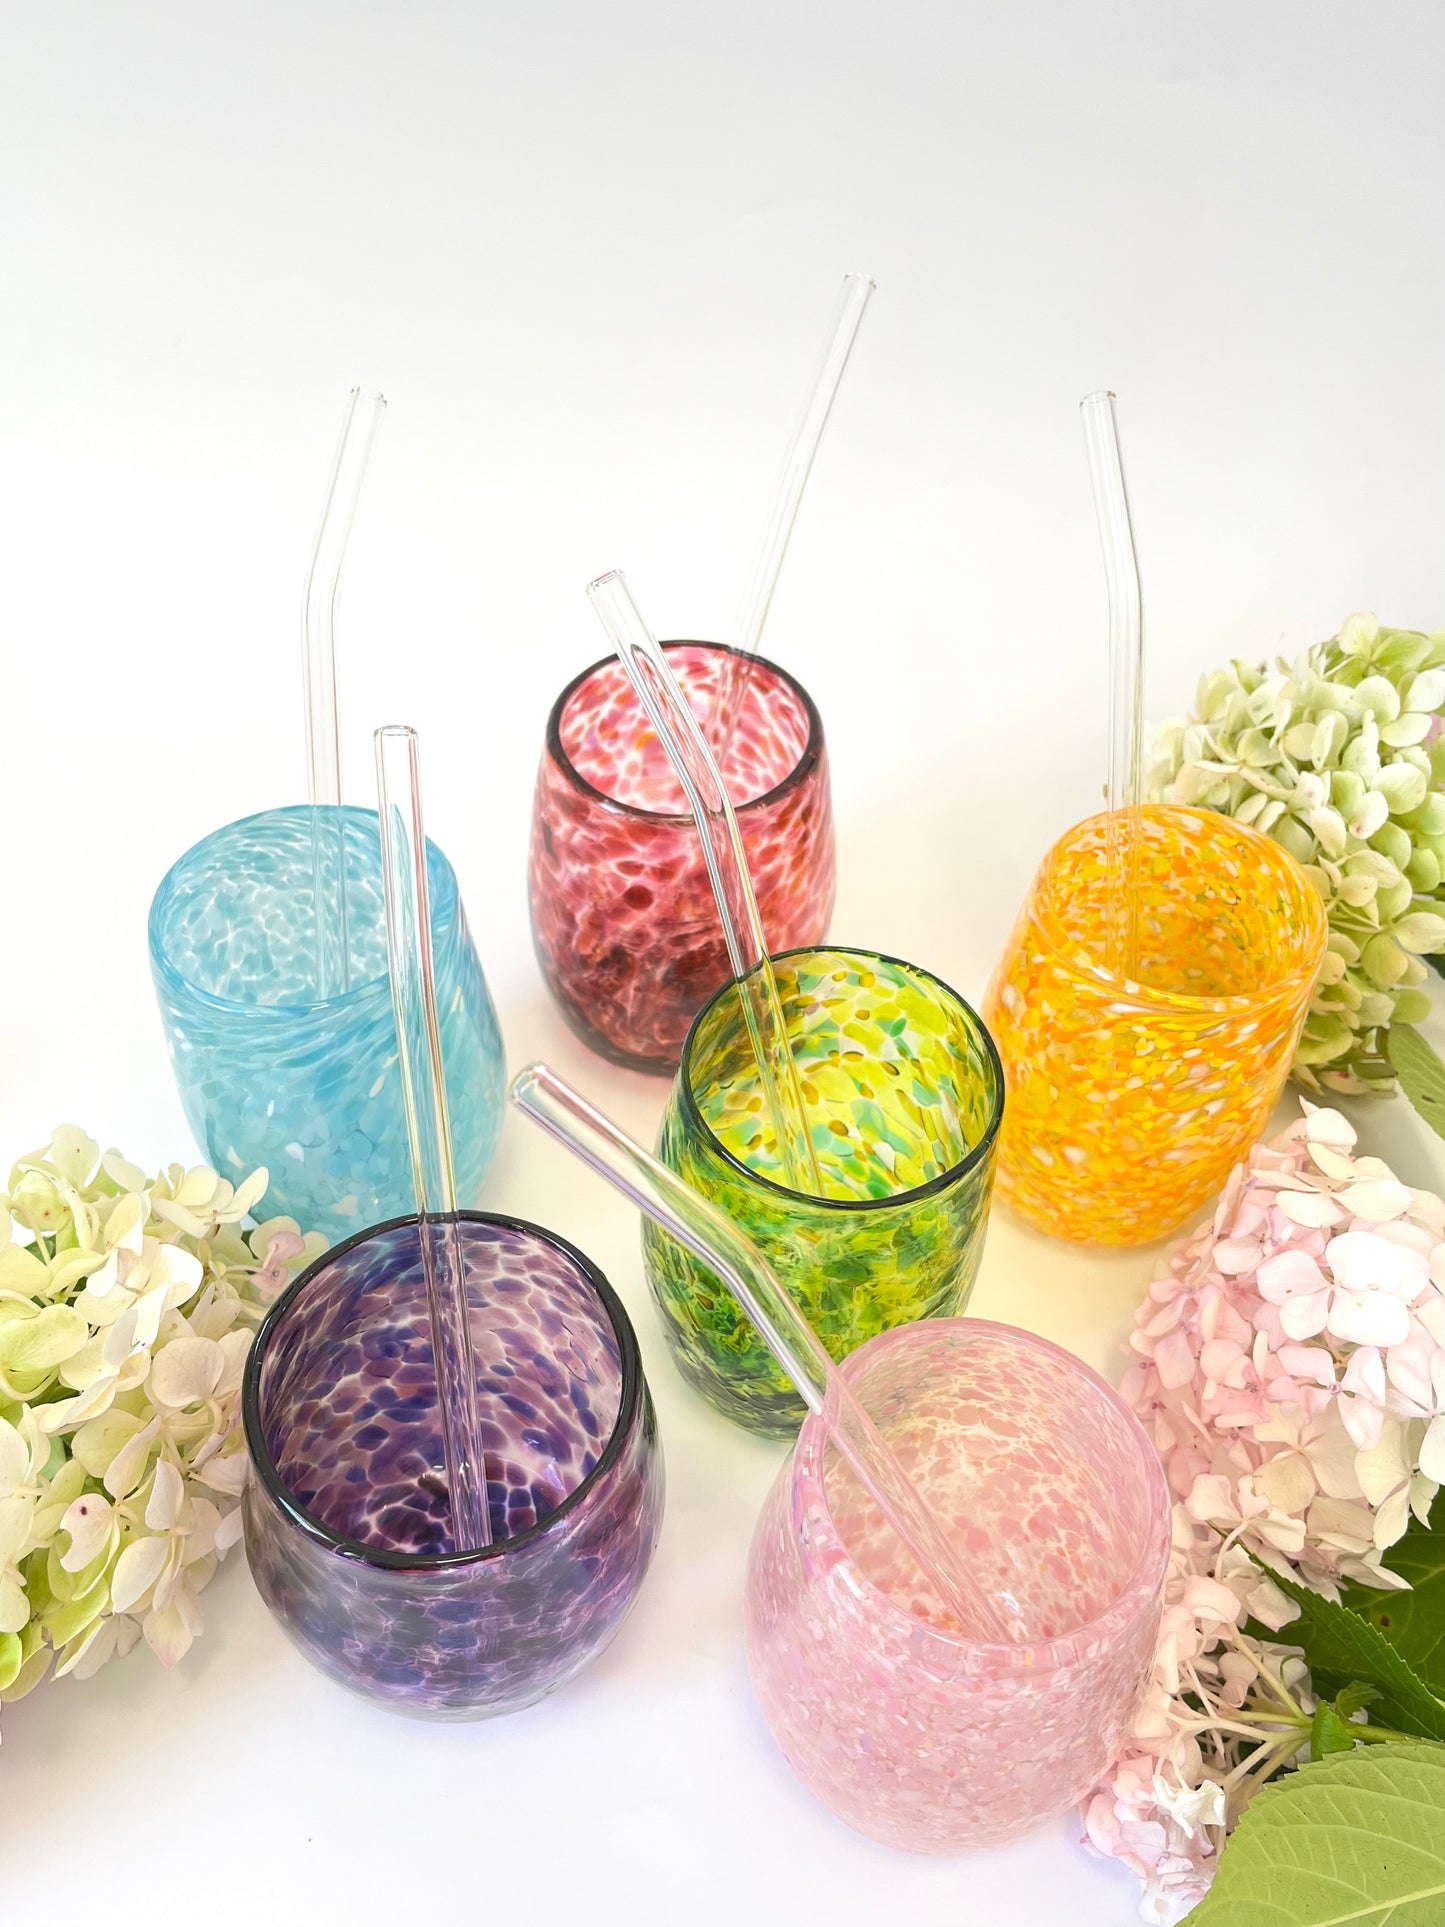 Set of 6 Reusable Glass Straws - Transparent